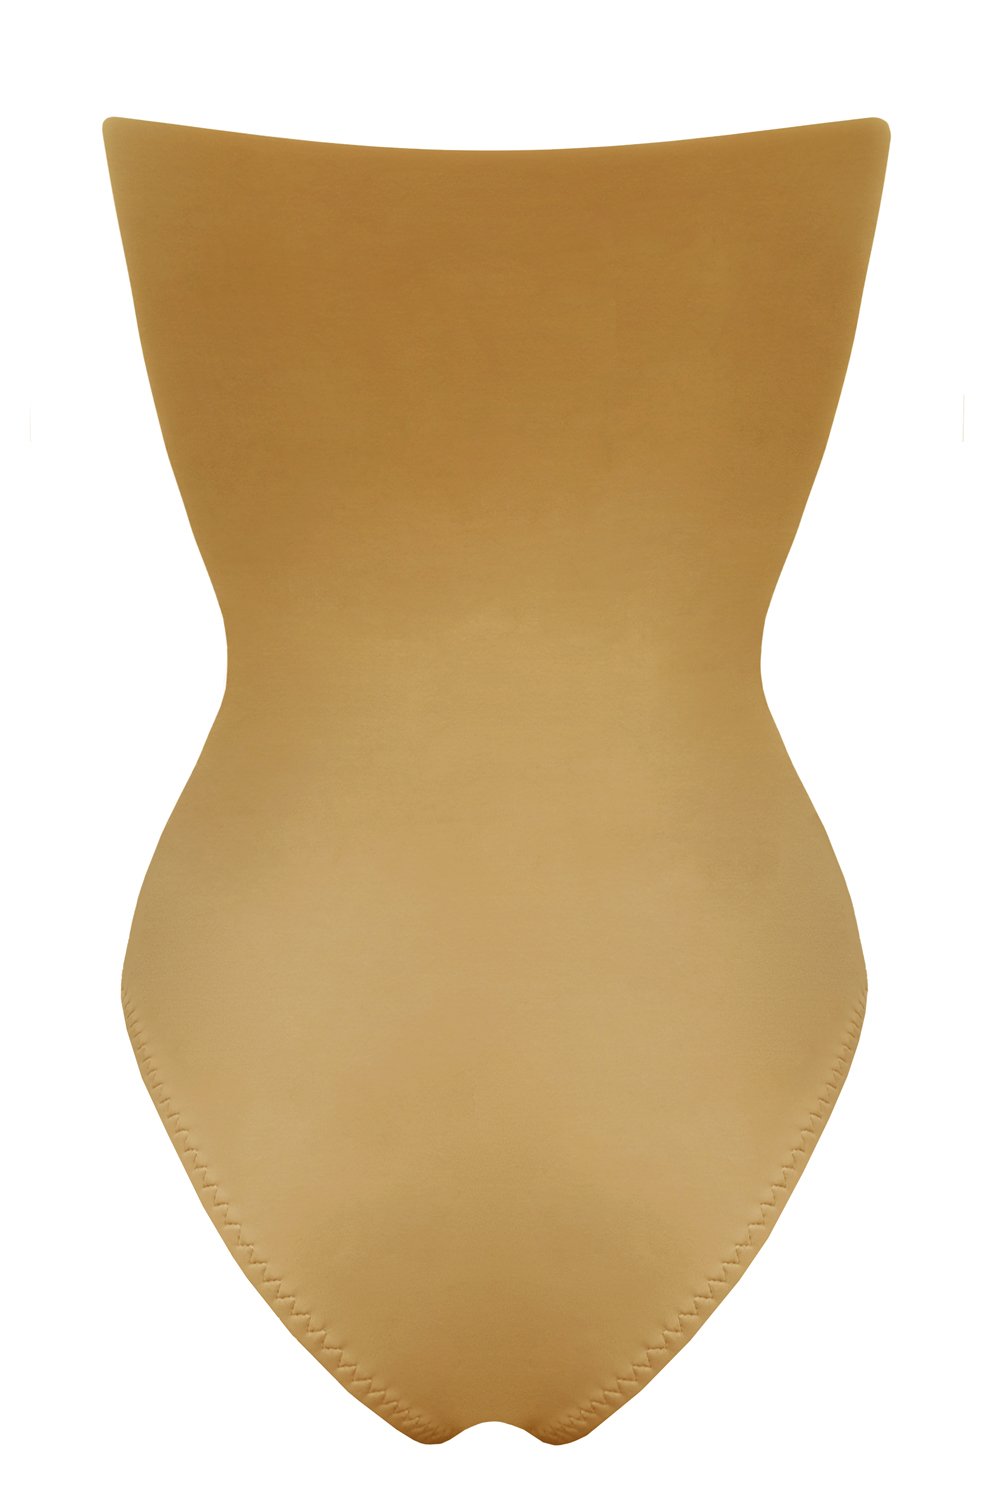 Ellipsia Golden Beige swimsuit